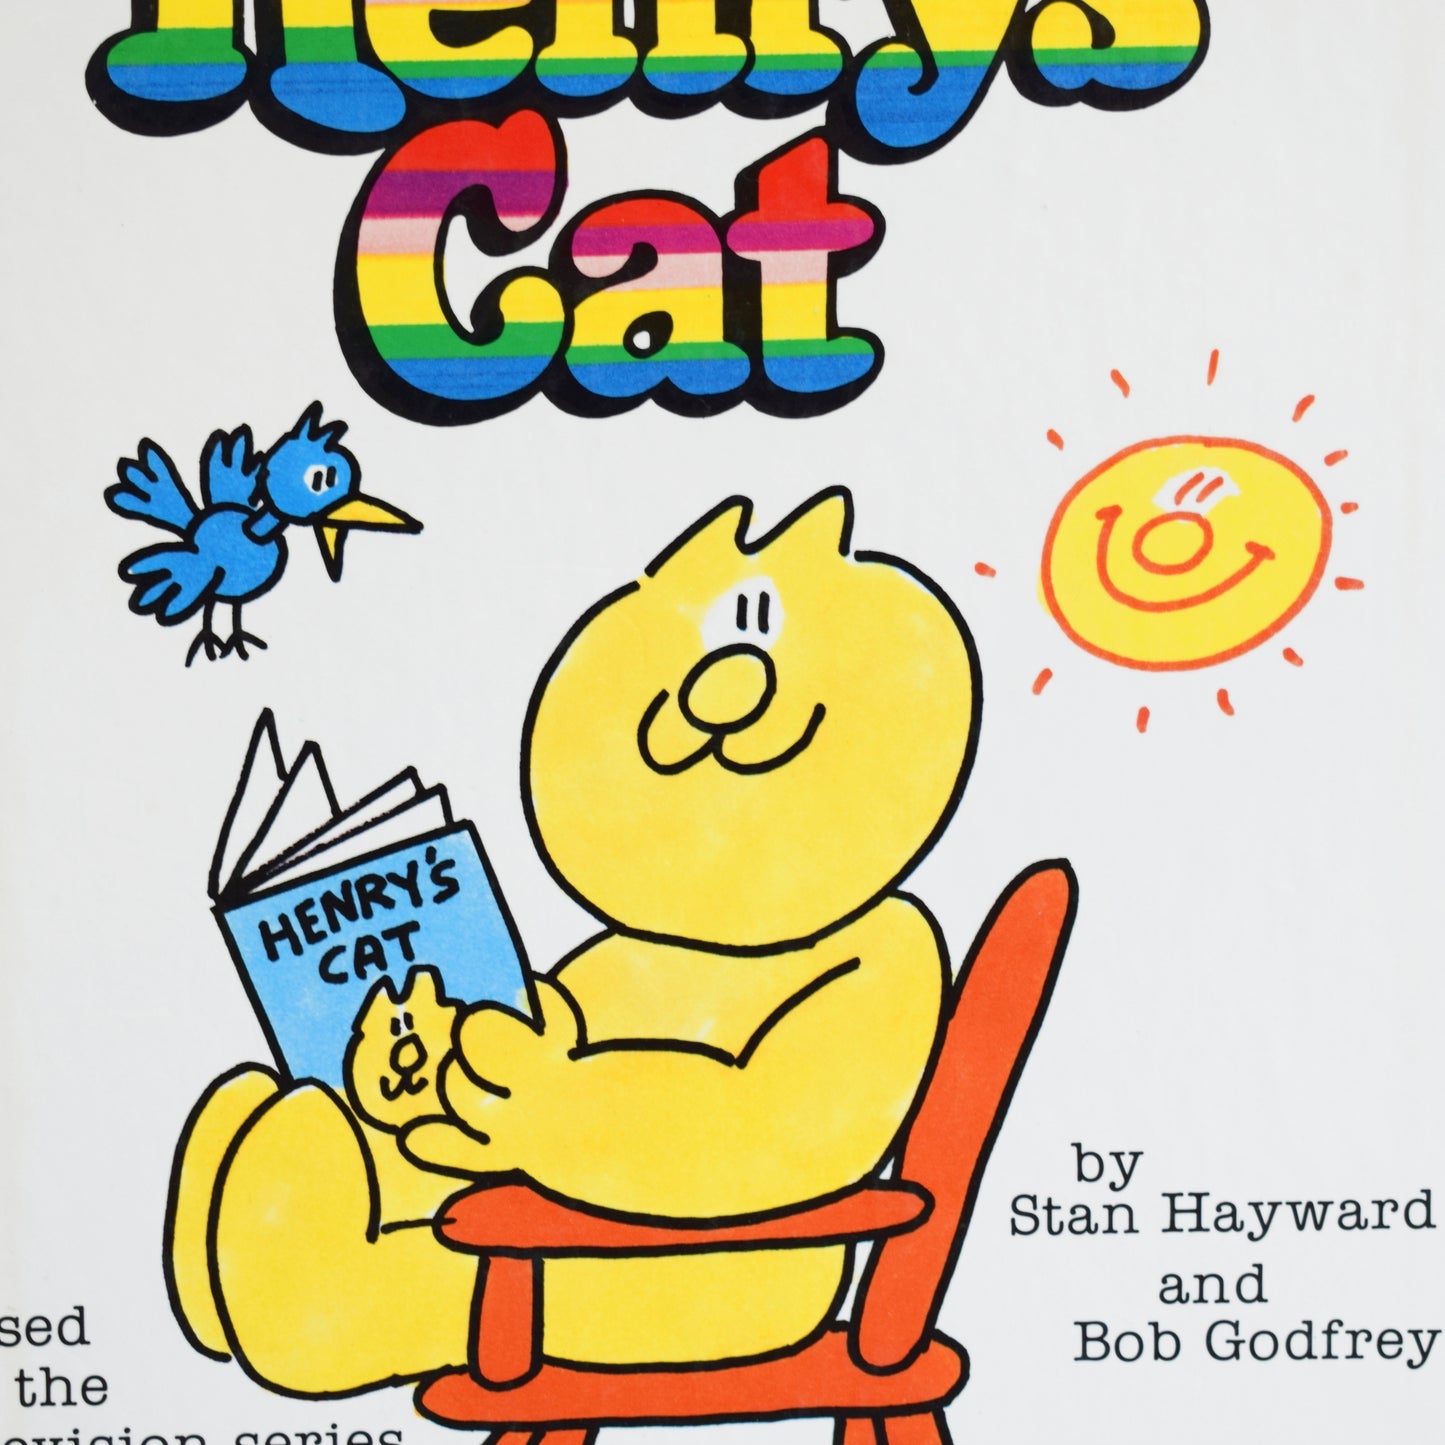 Vintage 1980s Henry's Cat Book .